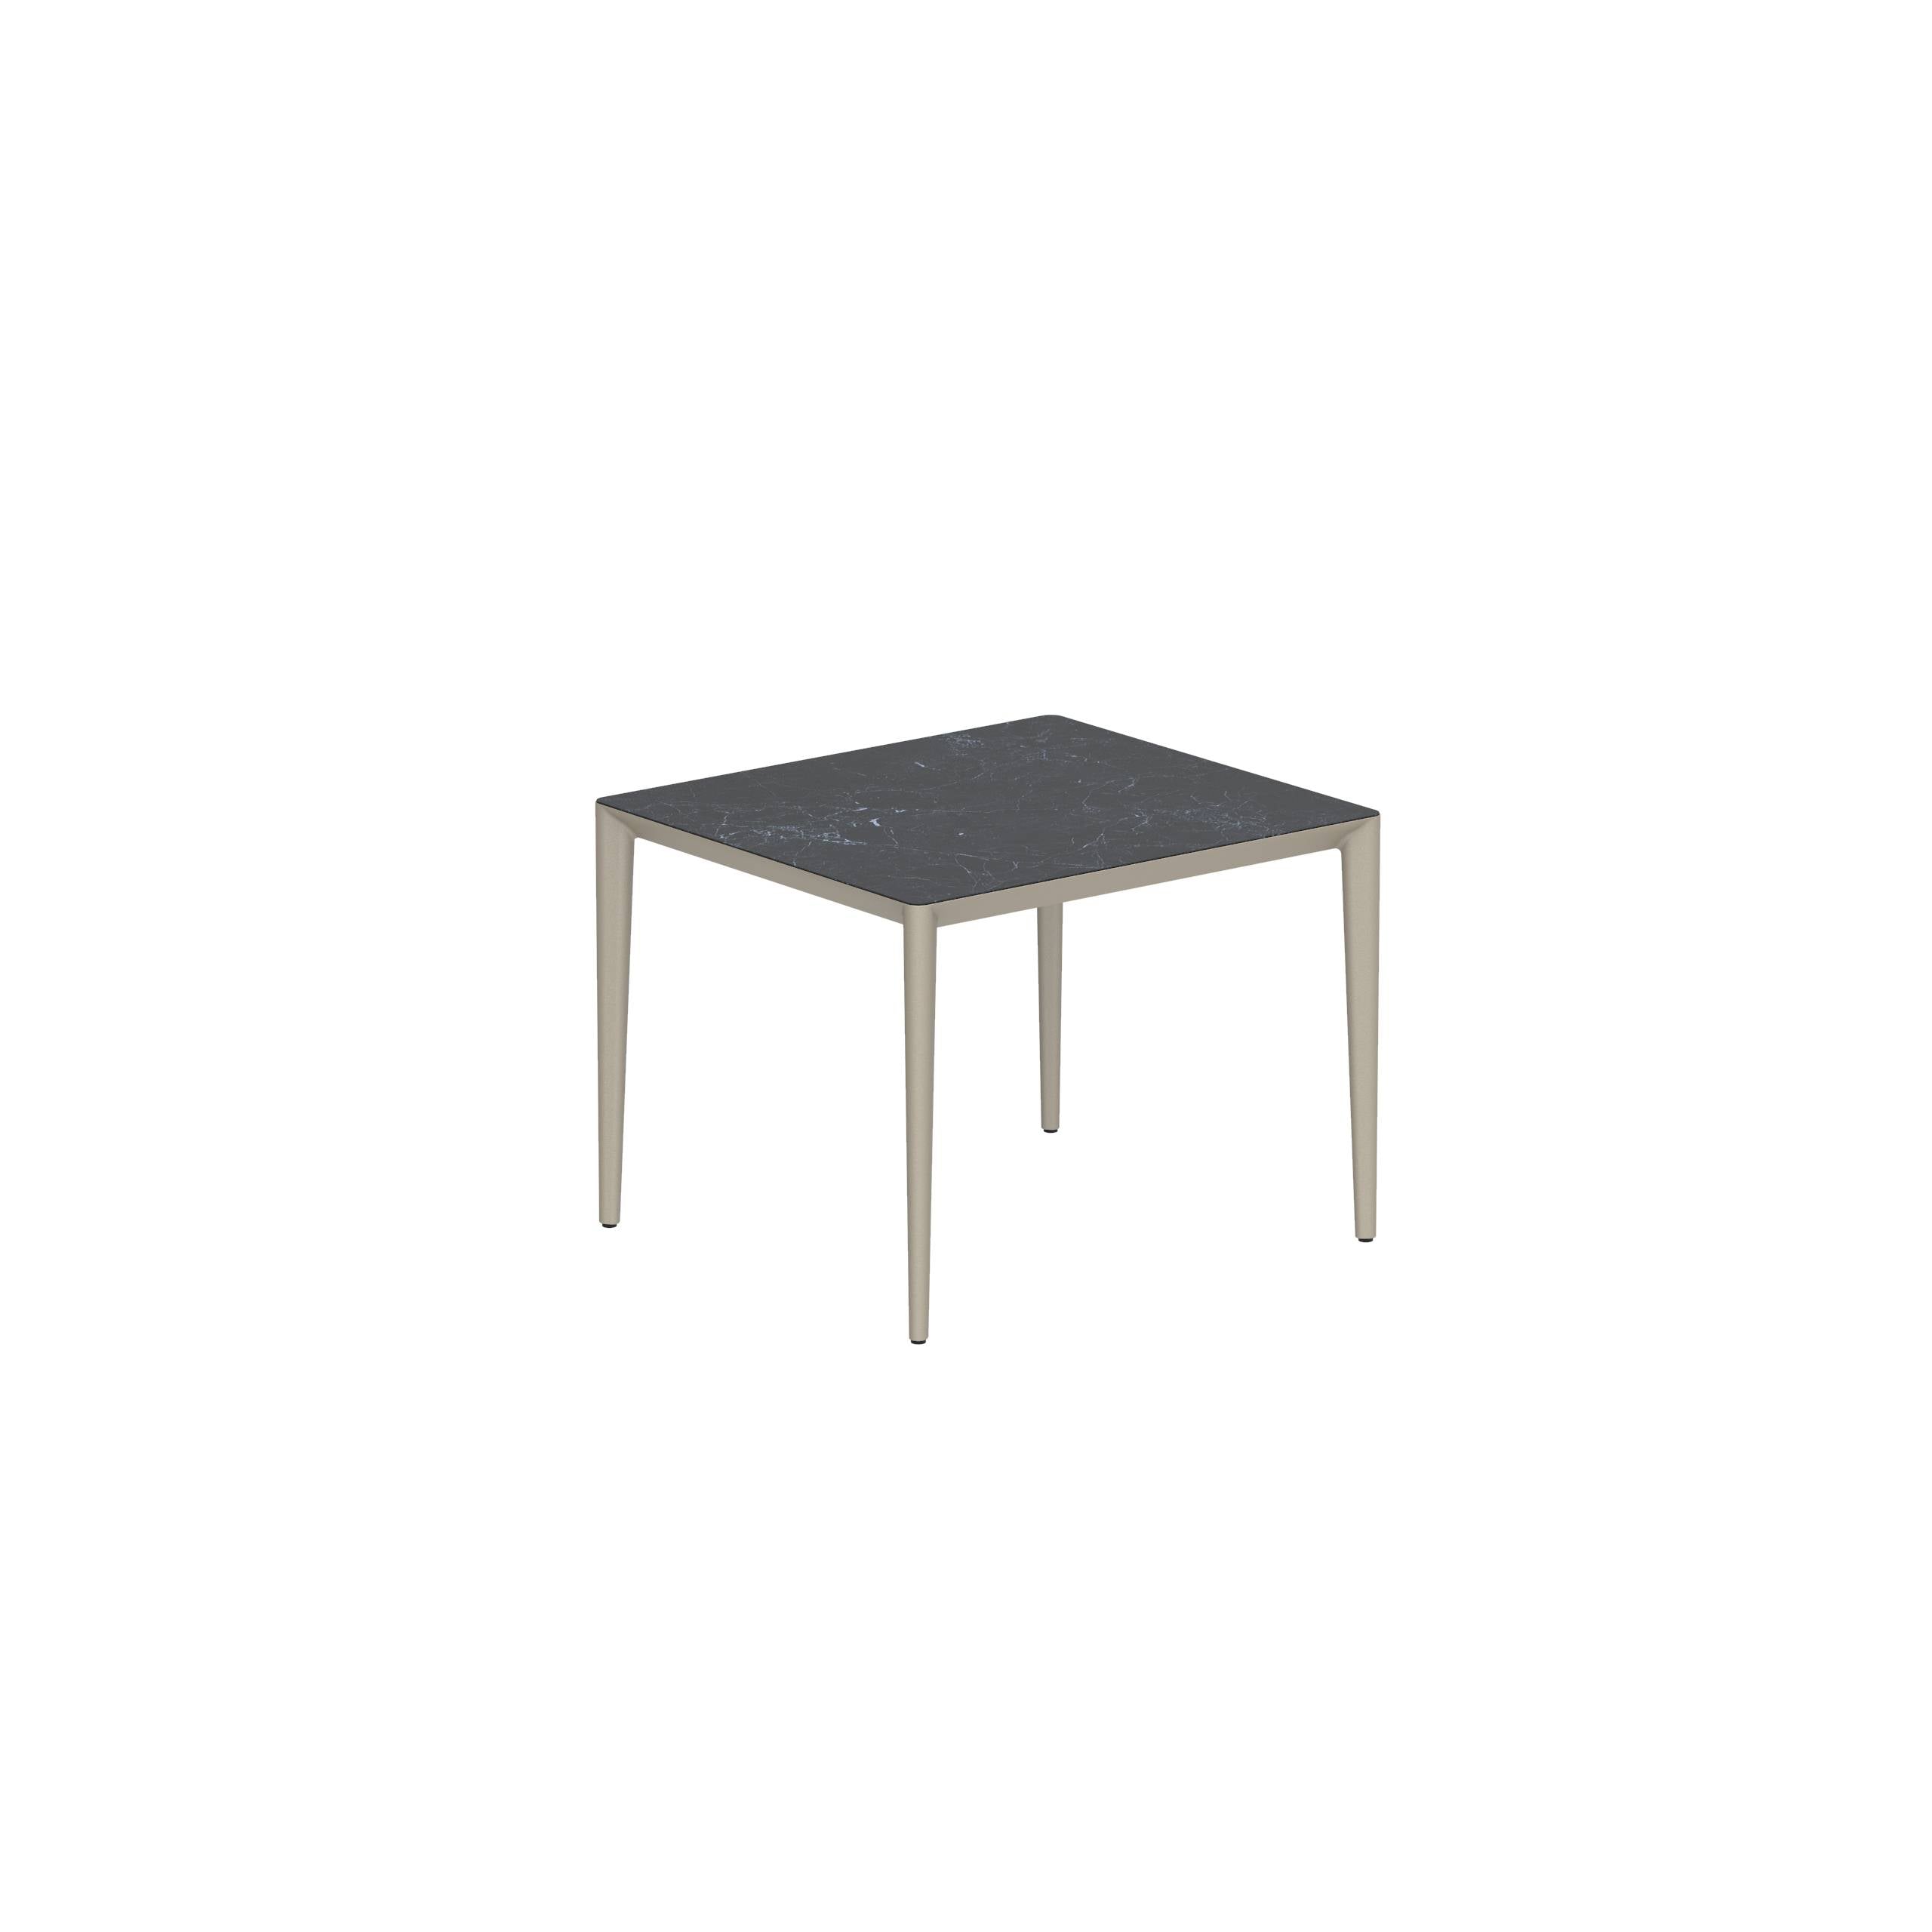 U-Nite Table 100x90cm Sand With Ceramic Tabletop In Nero Marquina